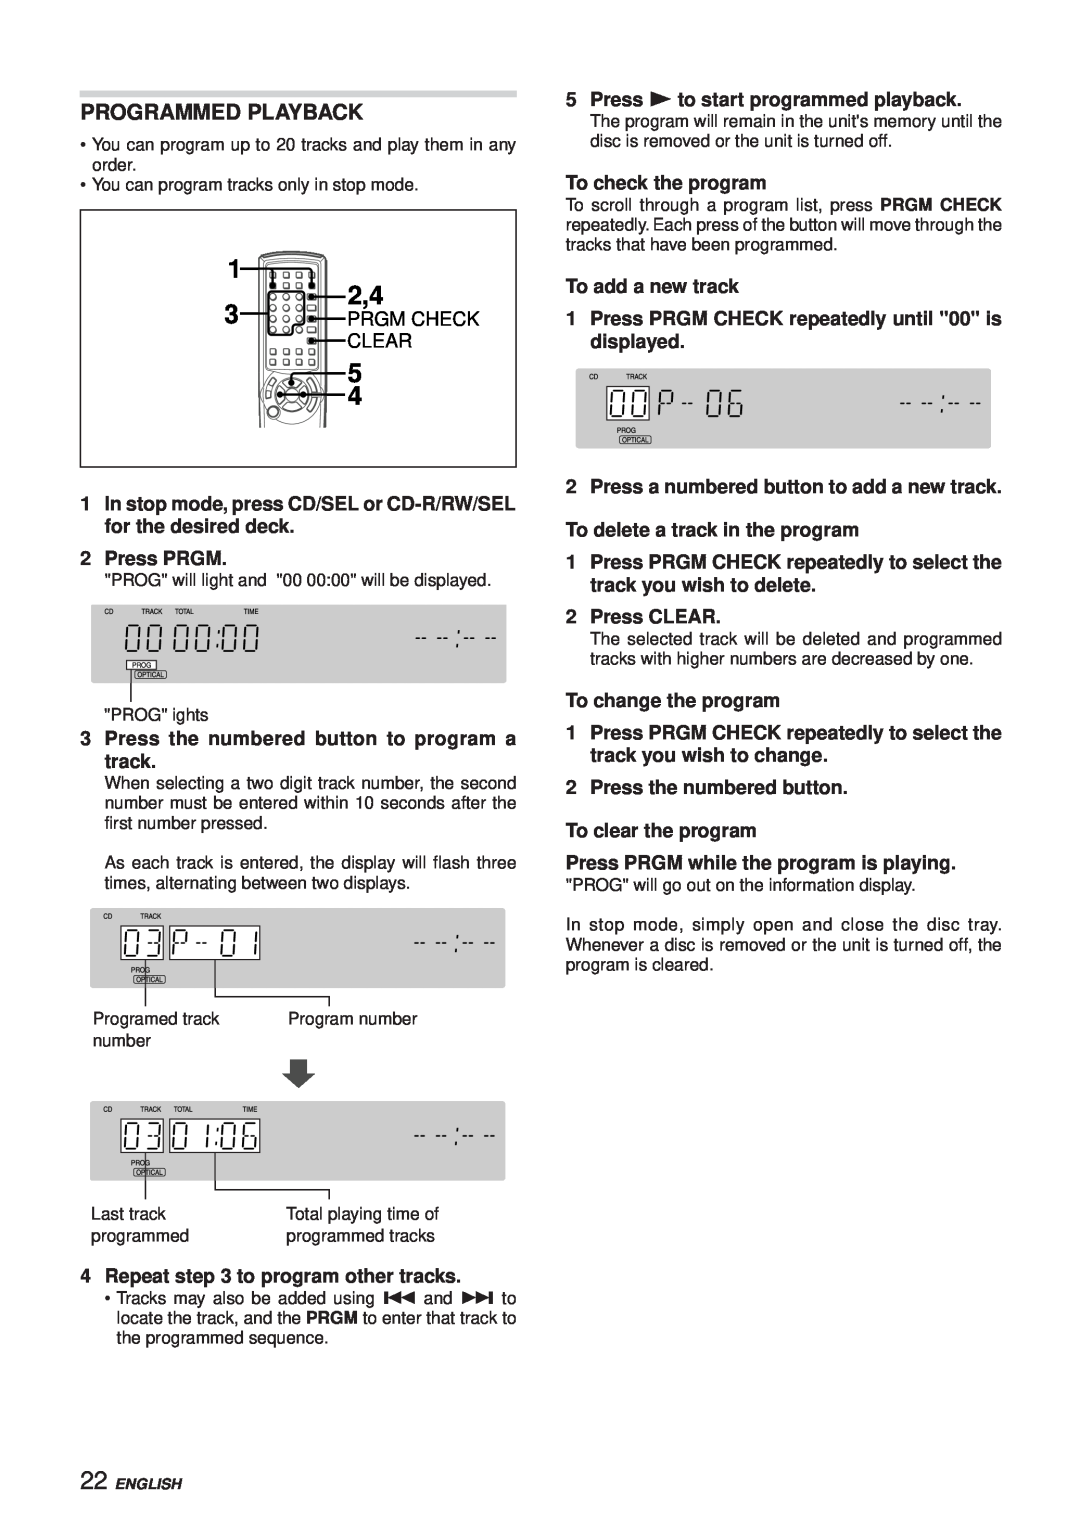 Aiwa XC-RW700 manual 1 2,4, Programmed Playback 